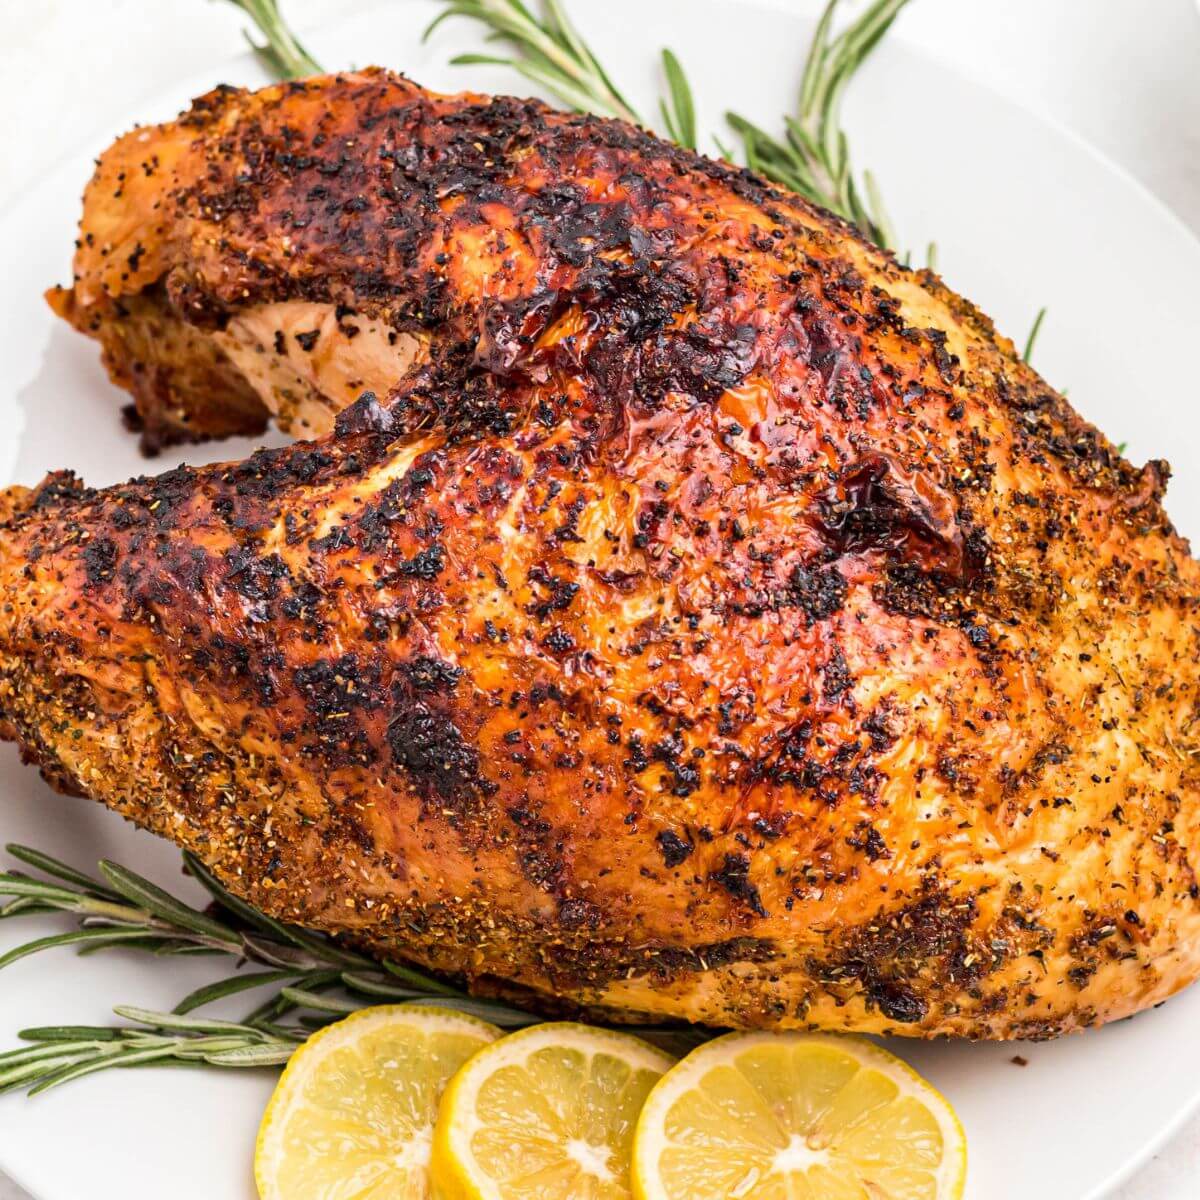 Best Air Fryer Turkey Breast Recipe - How to Make Air Fryer Turkey Breast